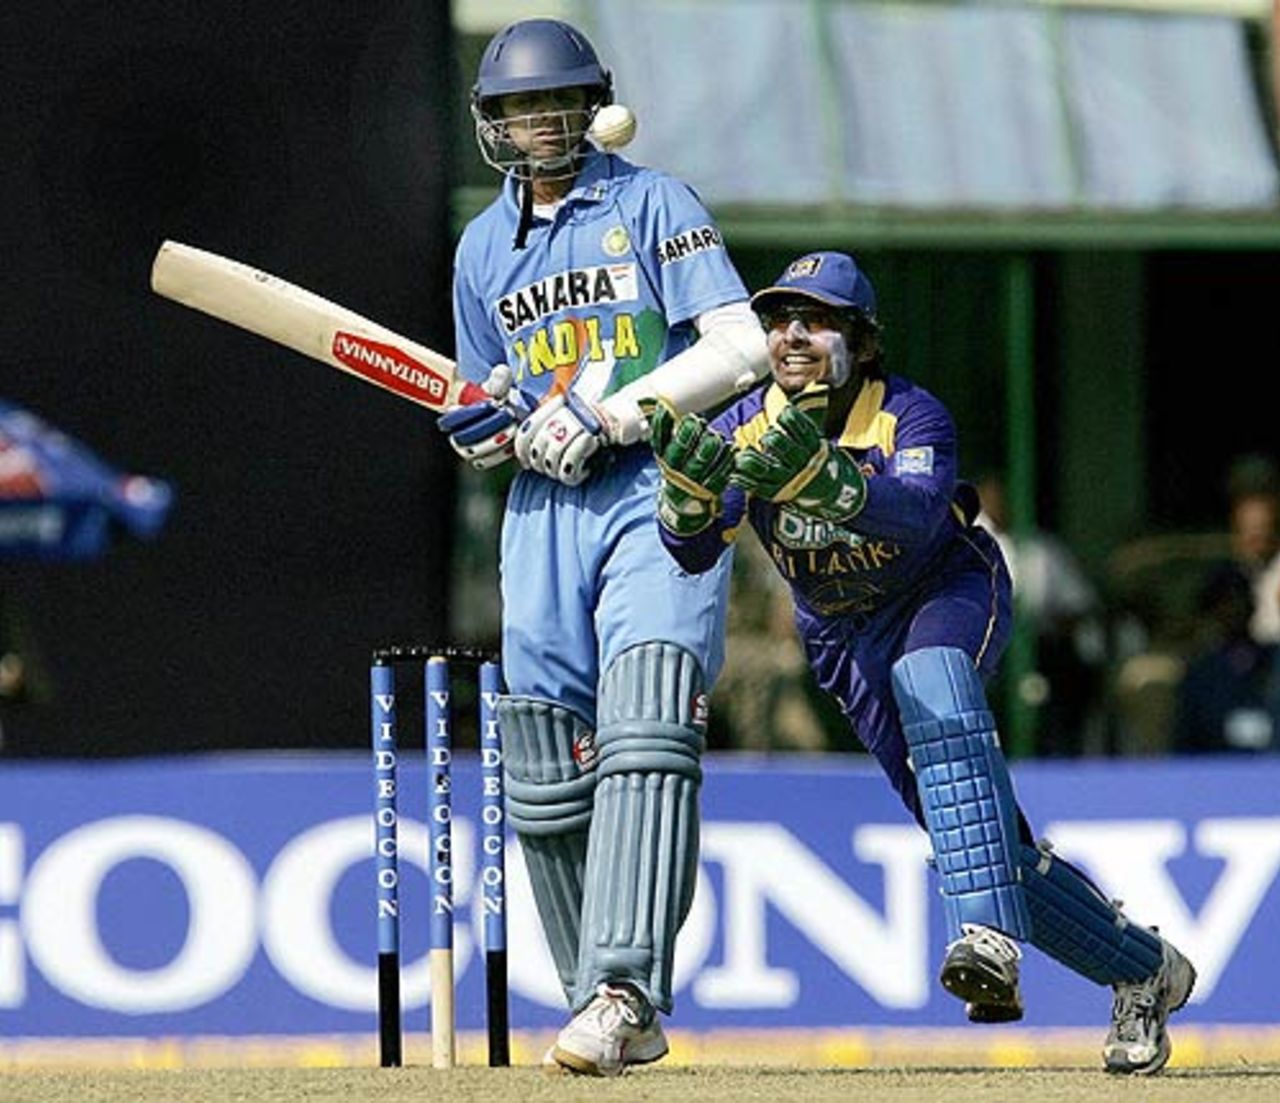 Rahul Dravid looks on as Kumar Sangakkara dives for a catch, India v Sri Lanka, 4th ODI,  Pune